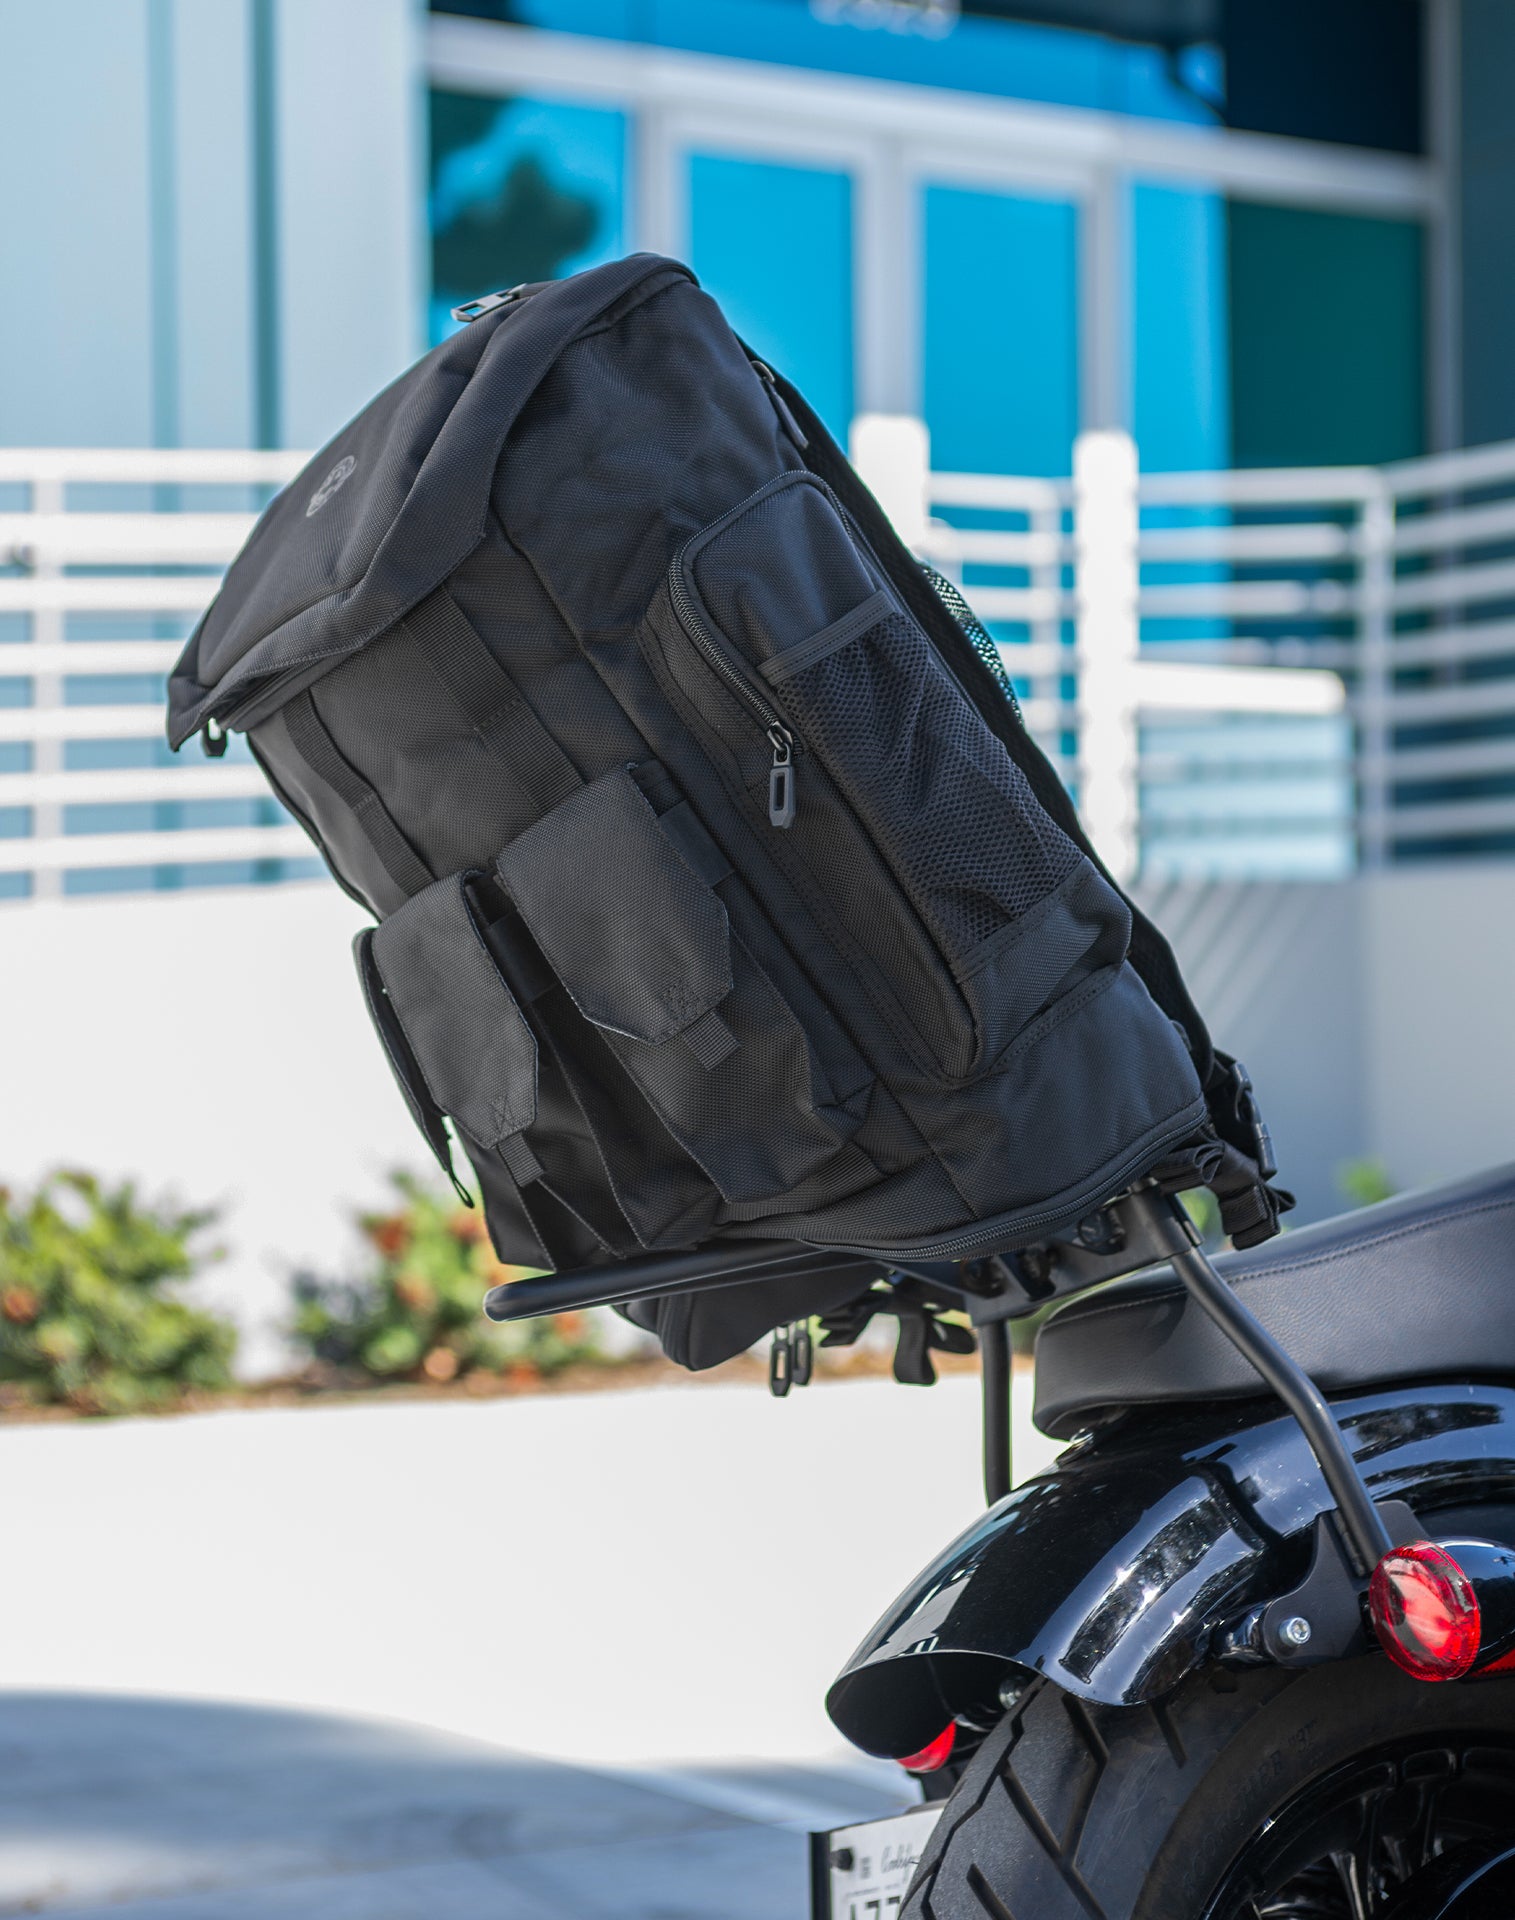 32L - Trident Large Motorcycle Backpack for Harley Davidson